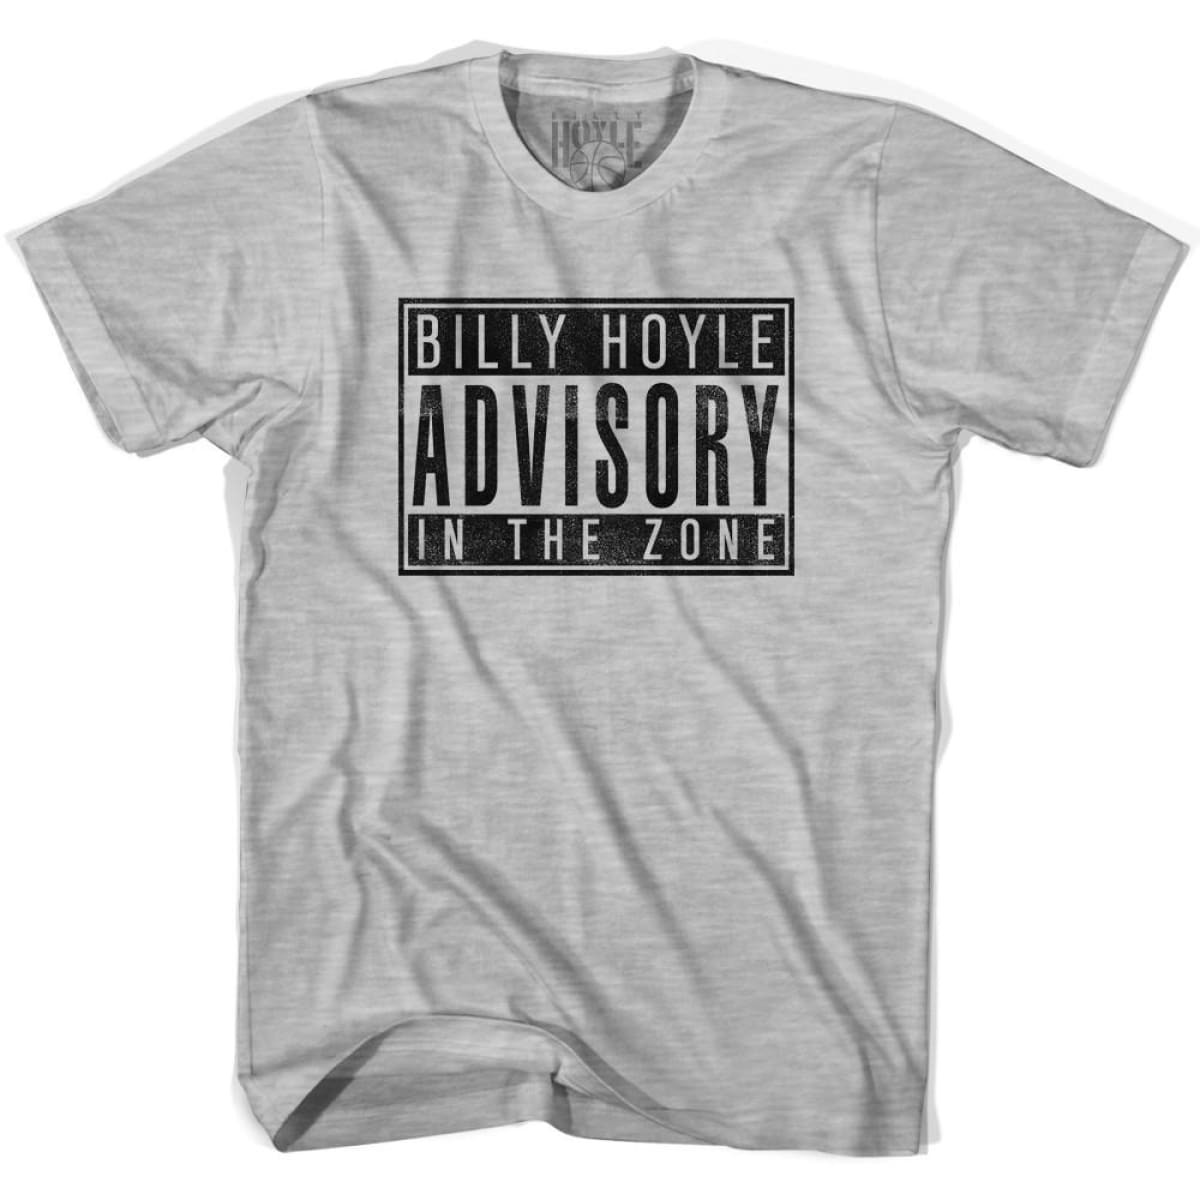 Image of Billy Hoyle Advisory In The Zone Basketball T-shirt - Grey Heather